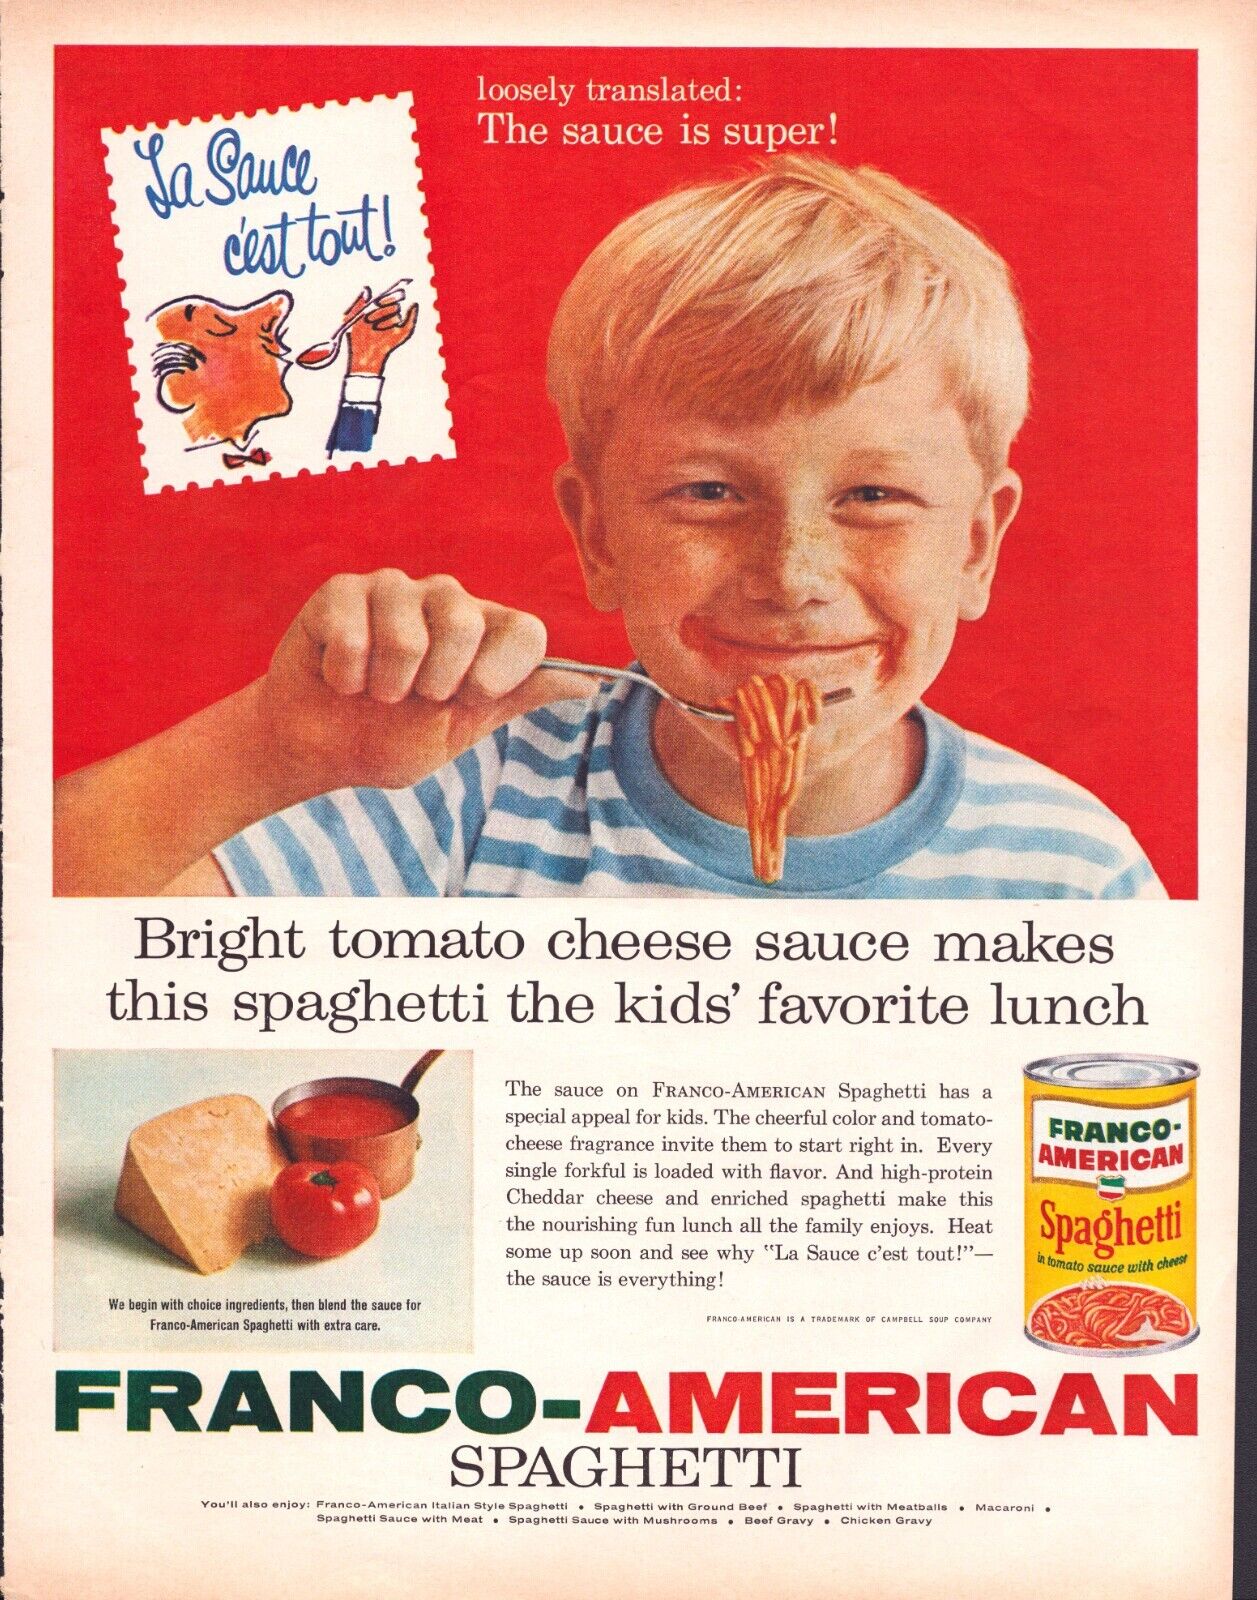 Vintage Print Ad -1960 for Franco-American Spaghetti and Samsonite Luggage